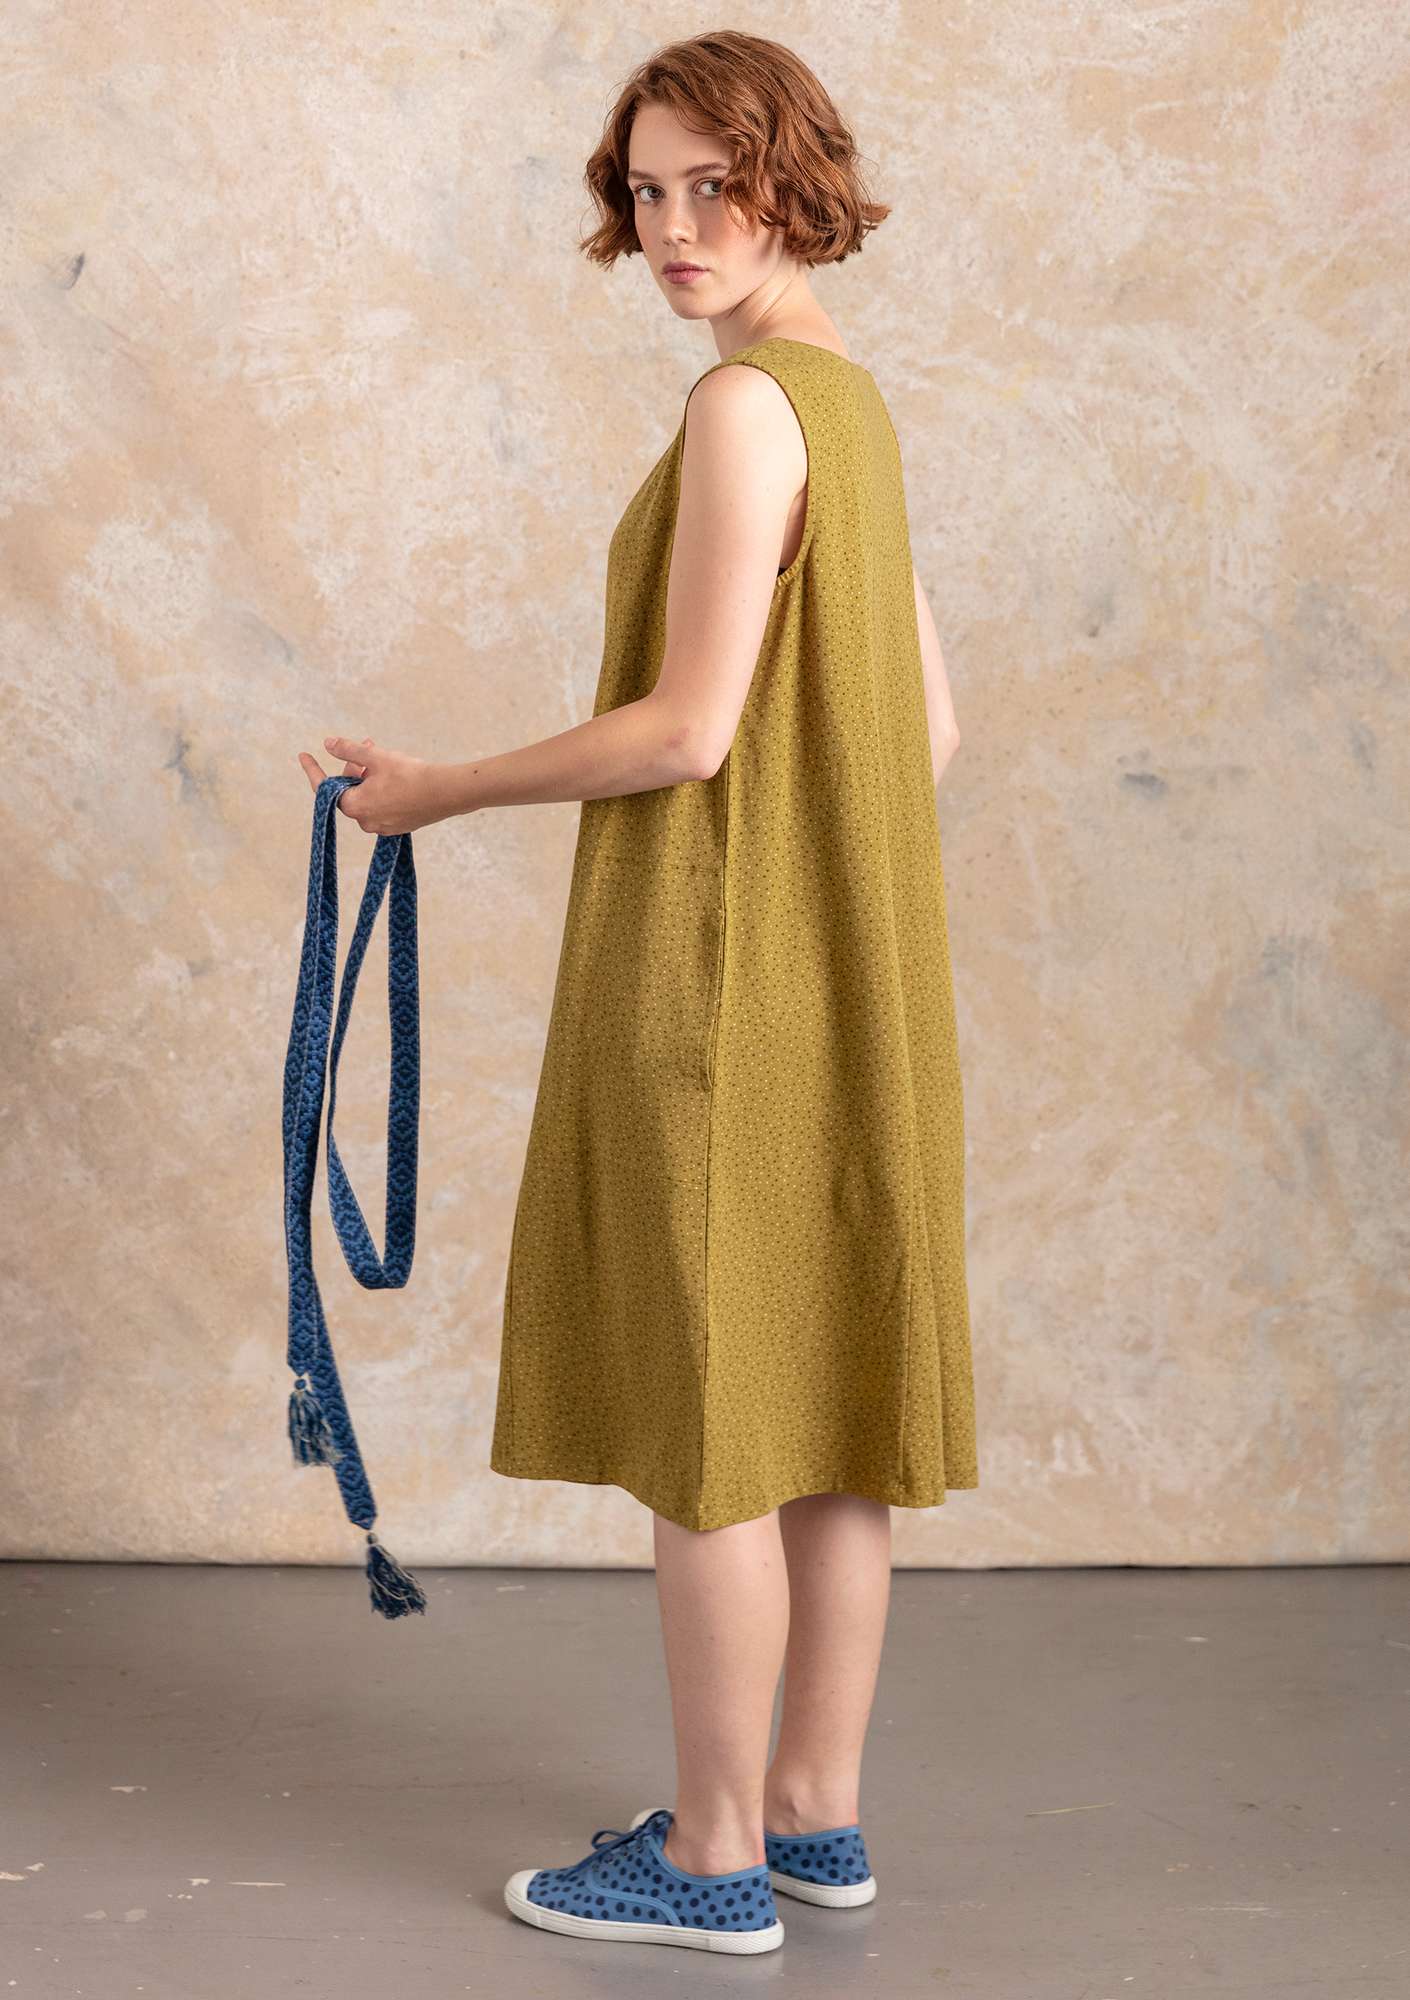 “Iliana” jersey dress in organic cotton/spandex olive/patterned